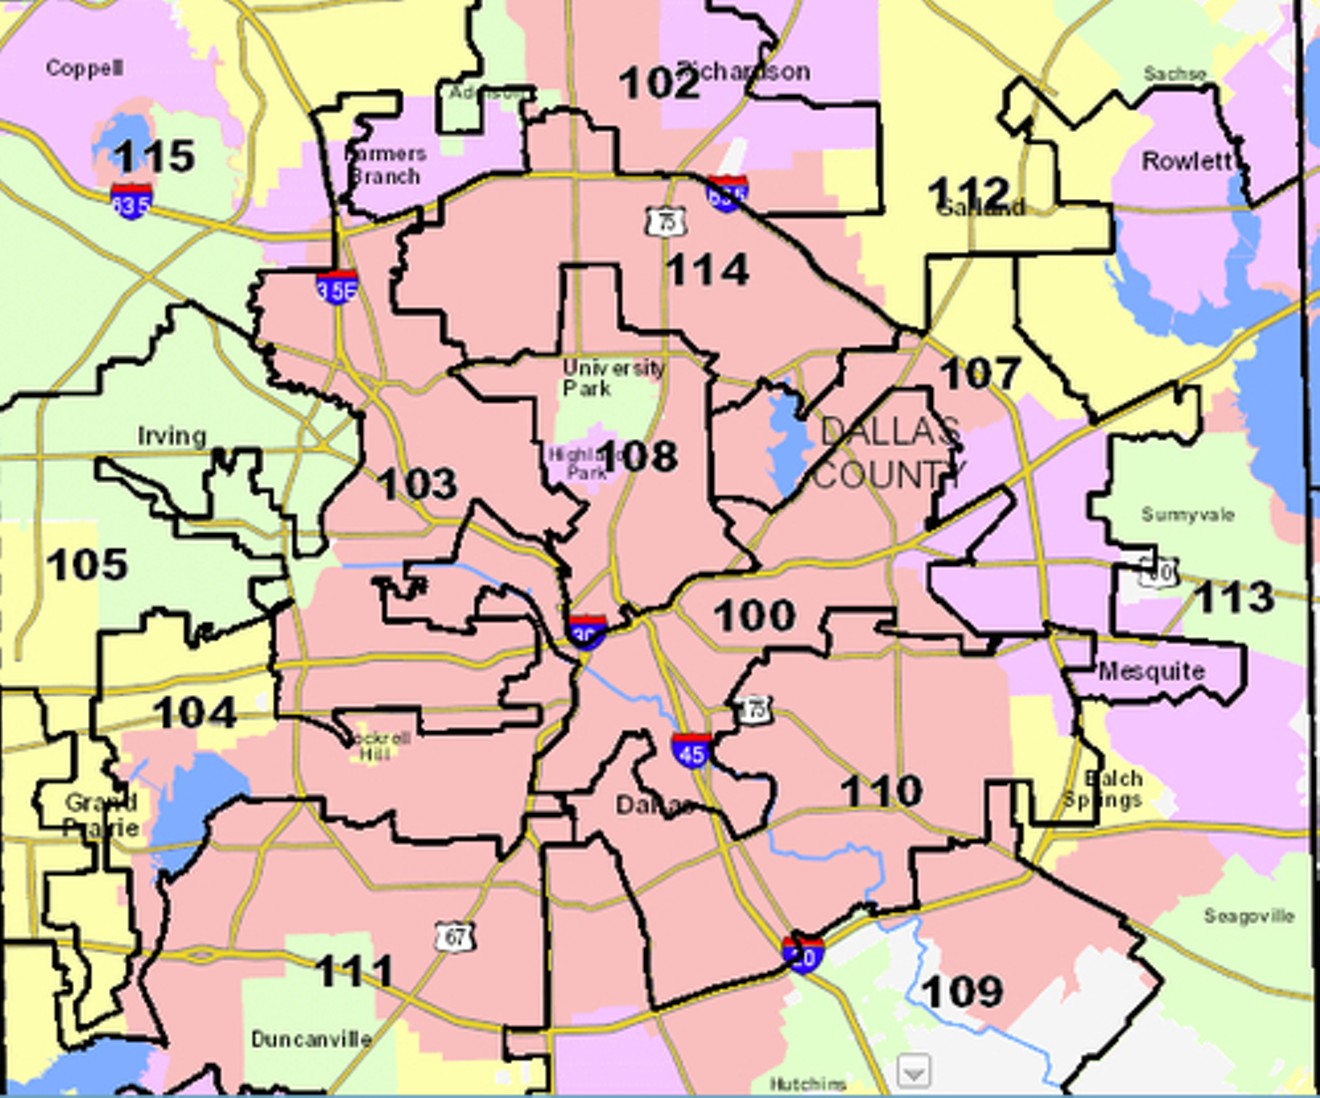 Dallas County's Texas House map